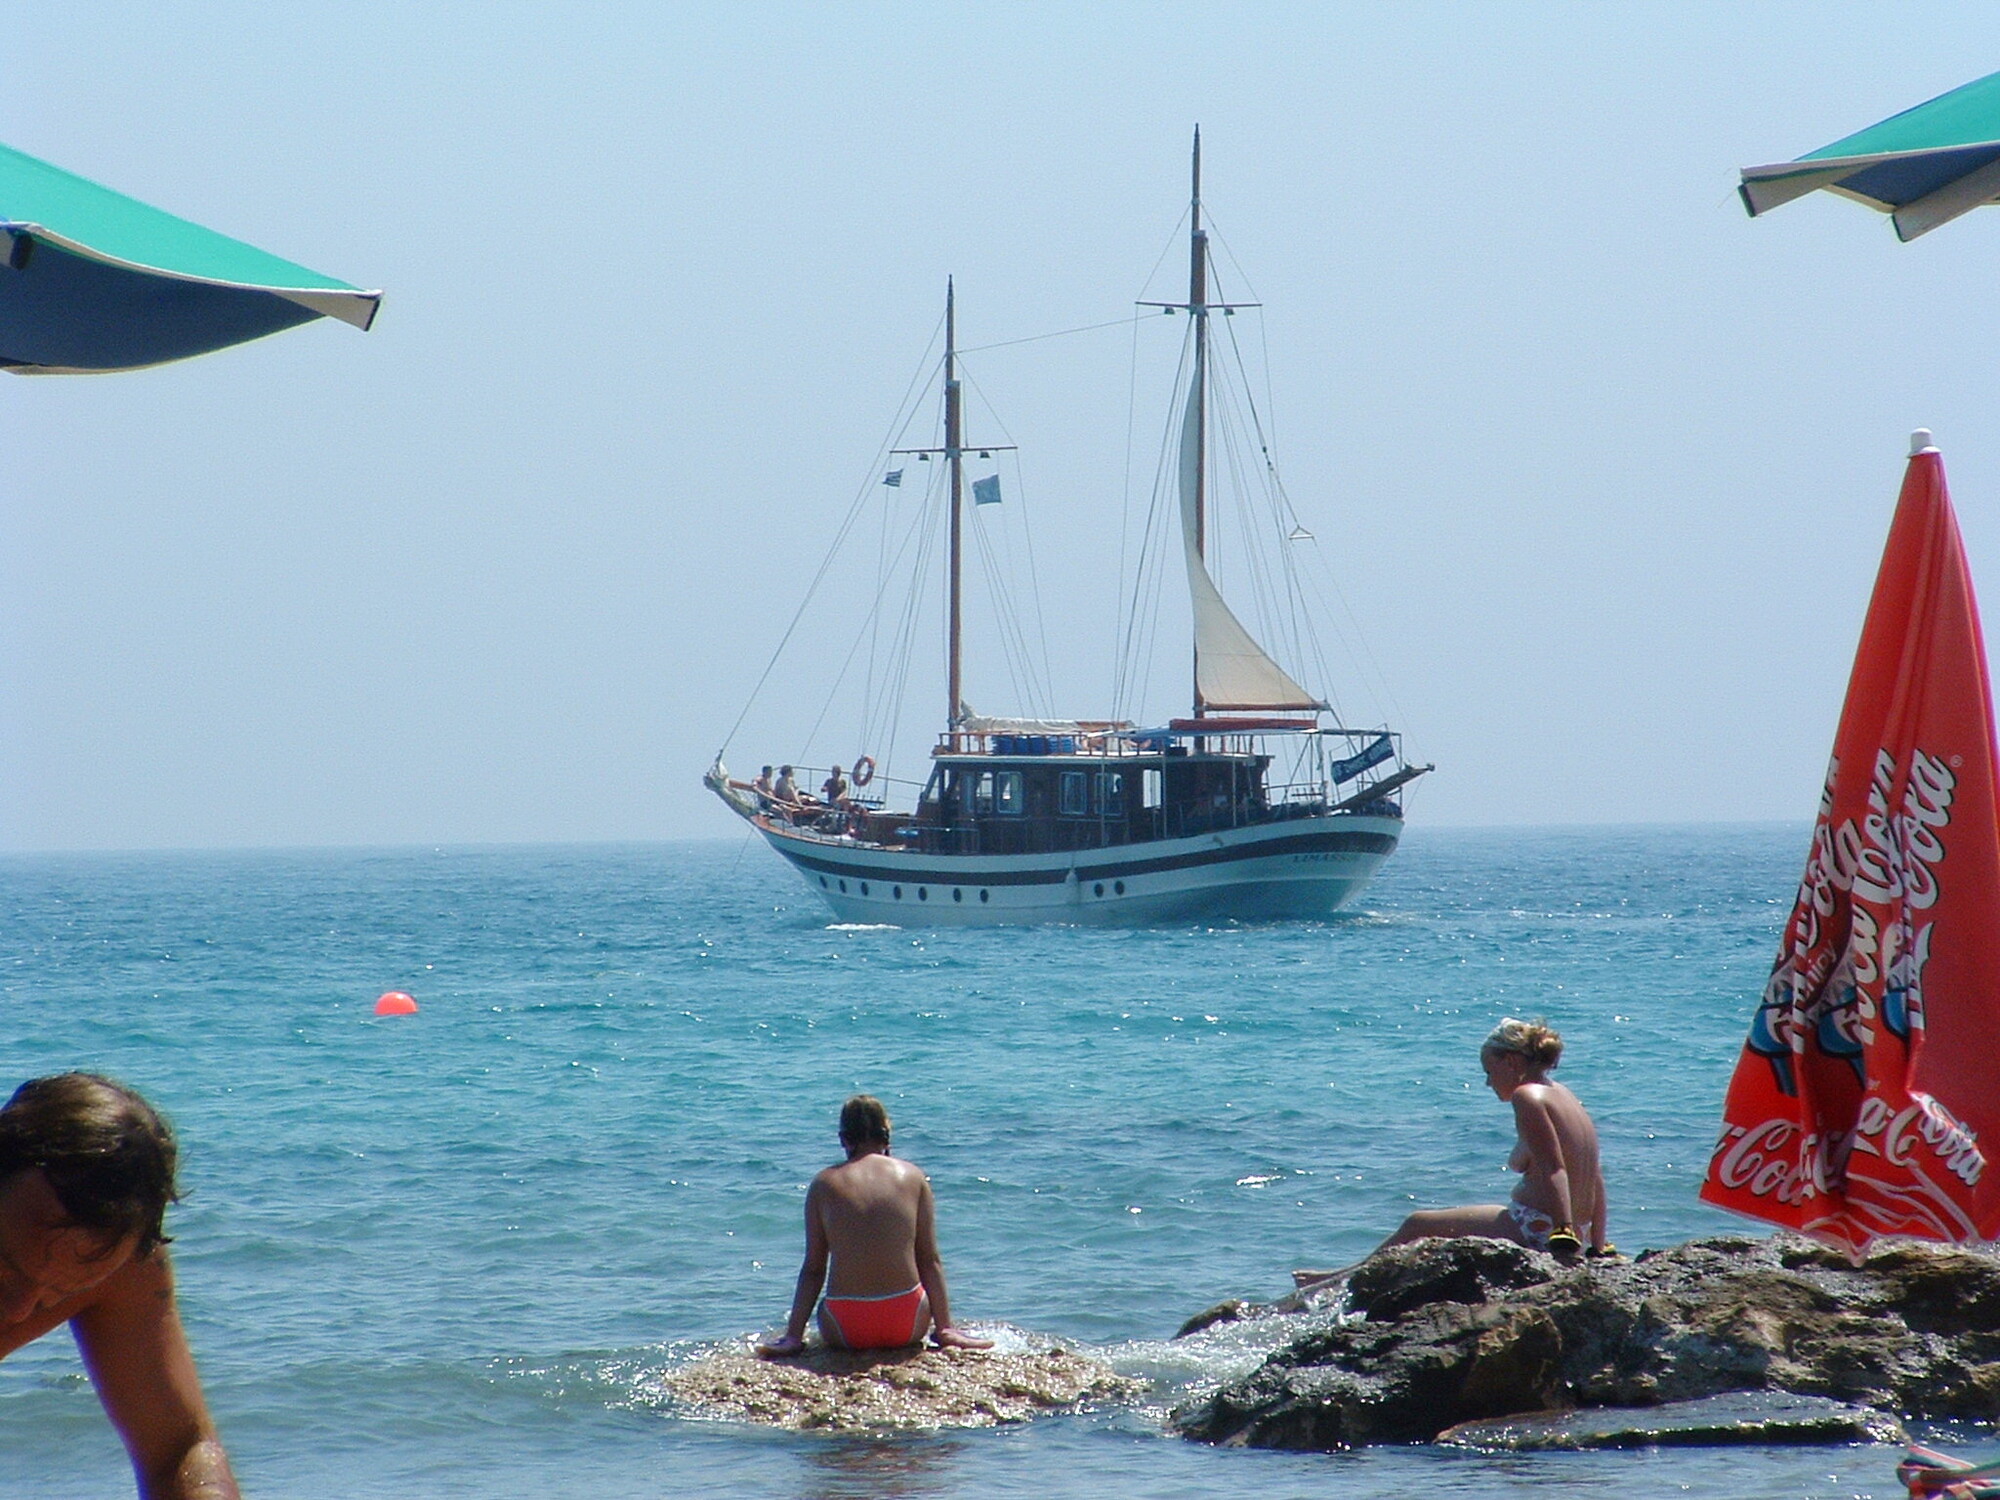 photographer RedZoneImages travel  photo taken at Coral Bay, Cyprus